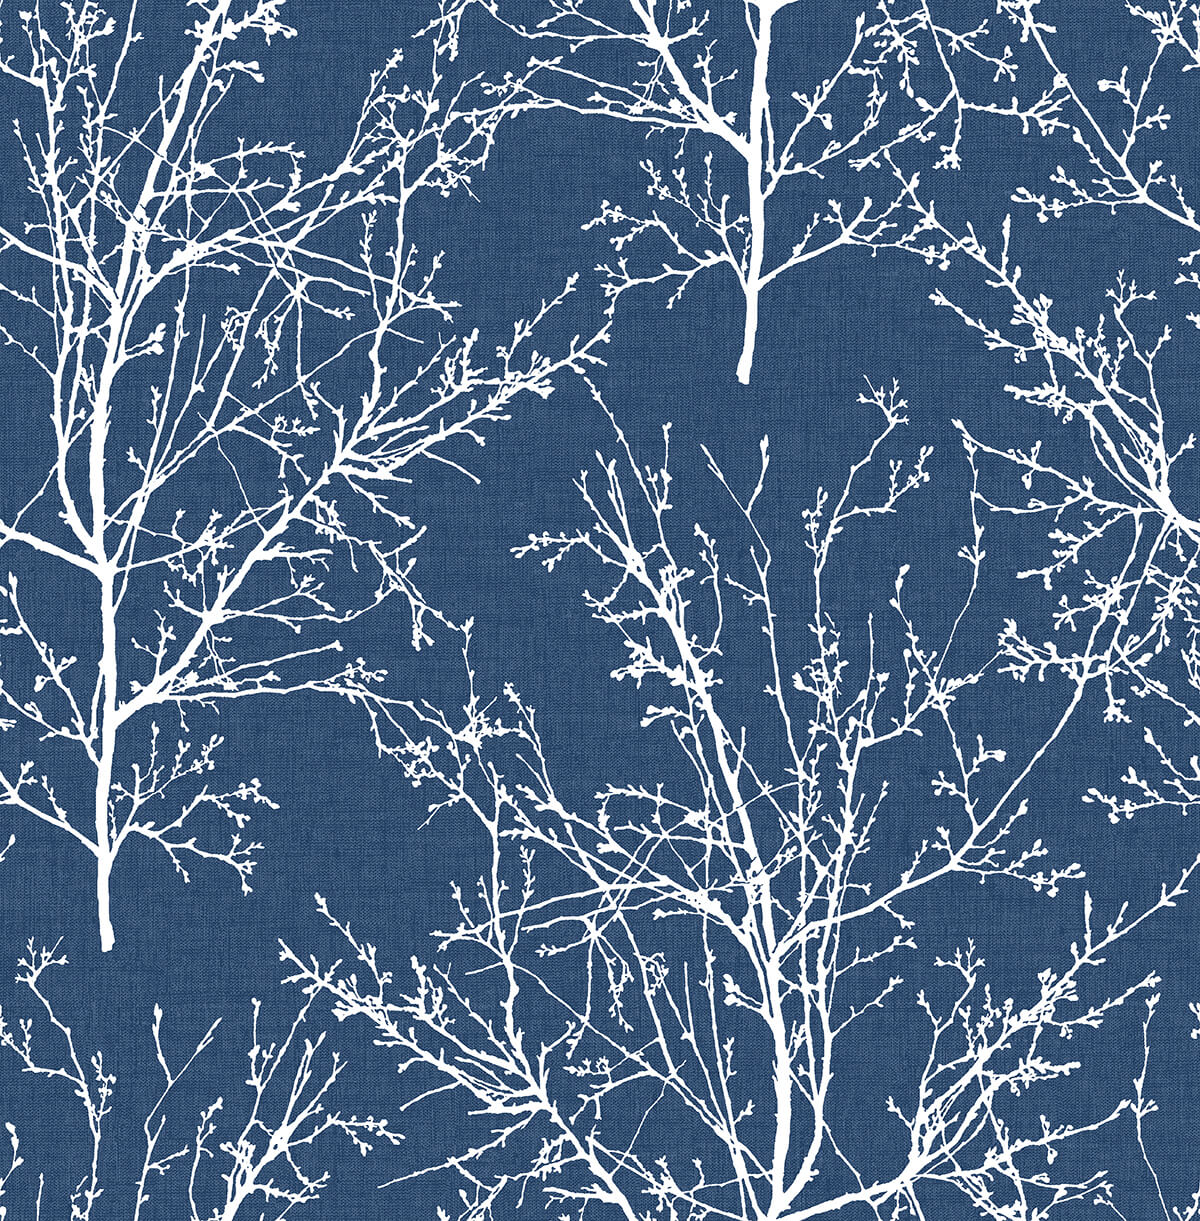 NextWall Tree Branches Peel & Stick Wallpaper - Blue